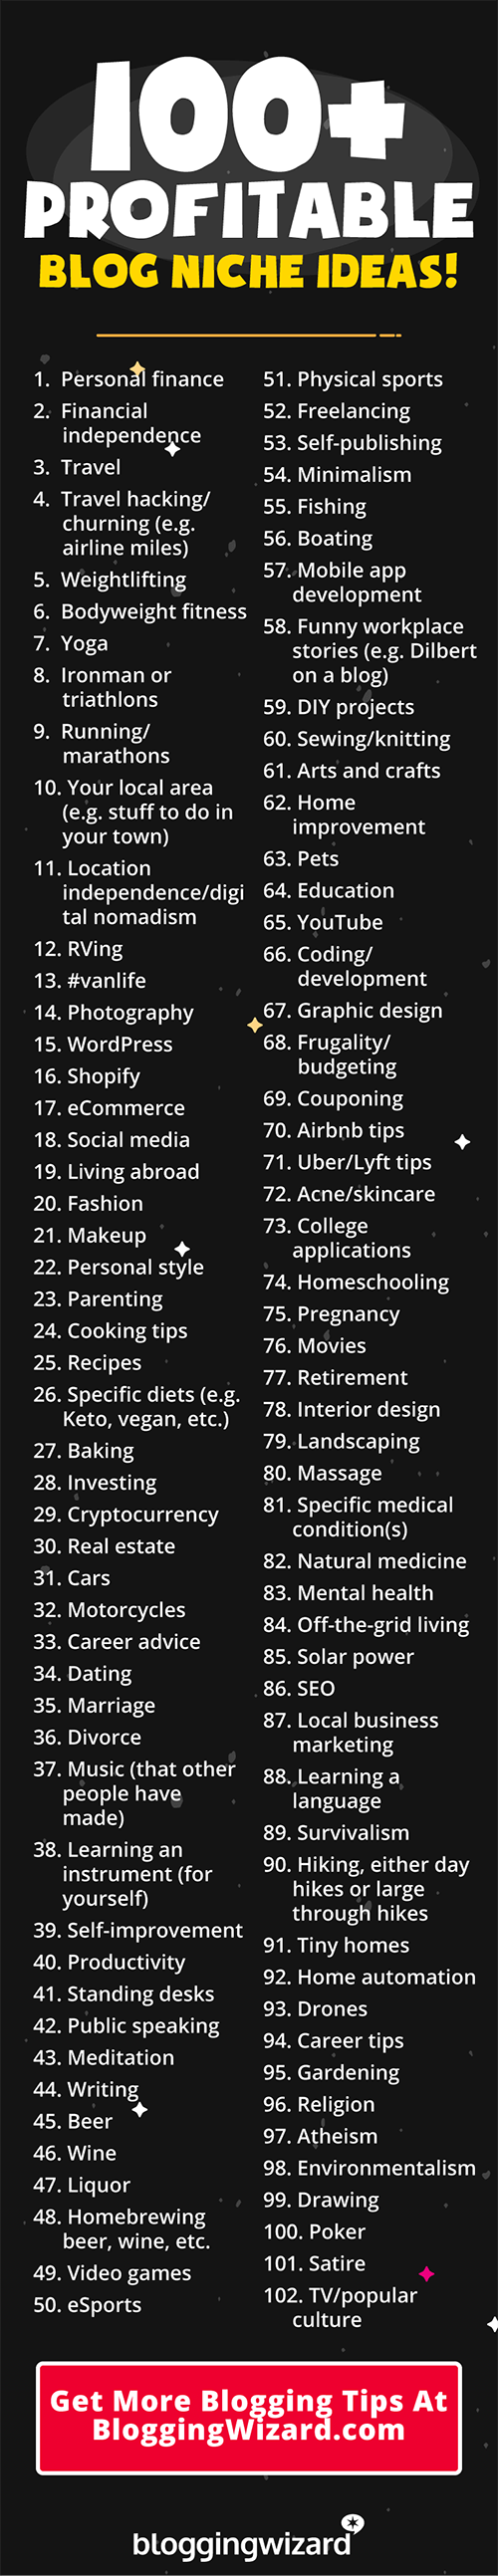 100 Profitable Blog Niche Ideas